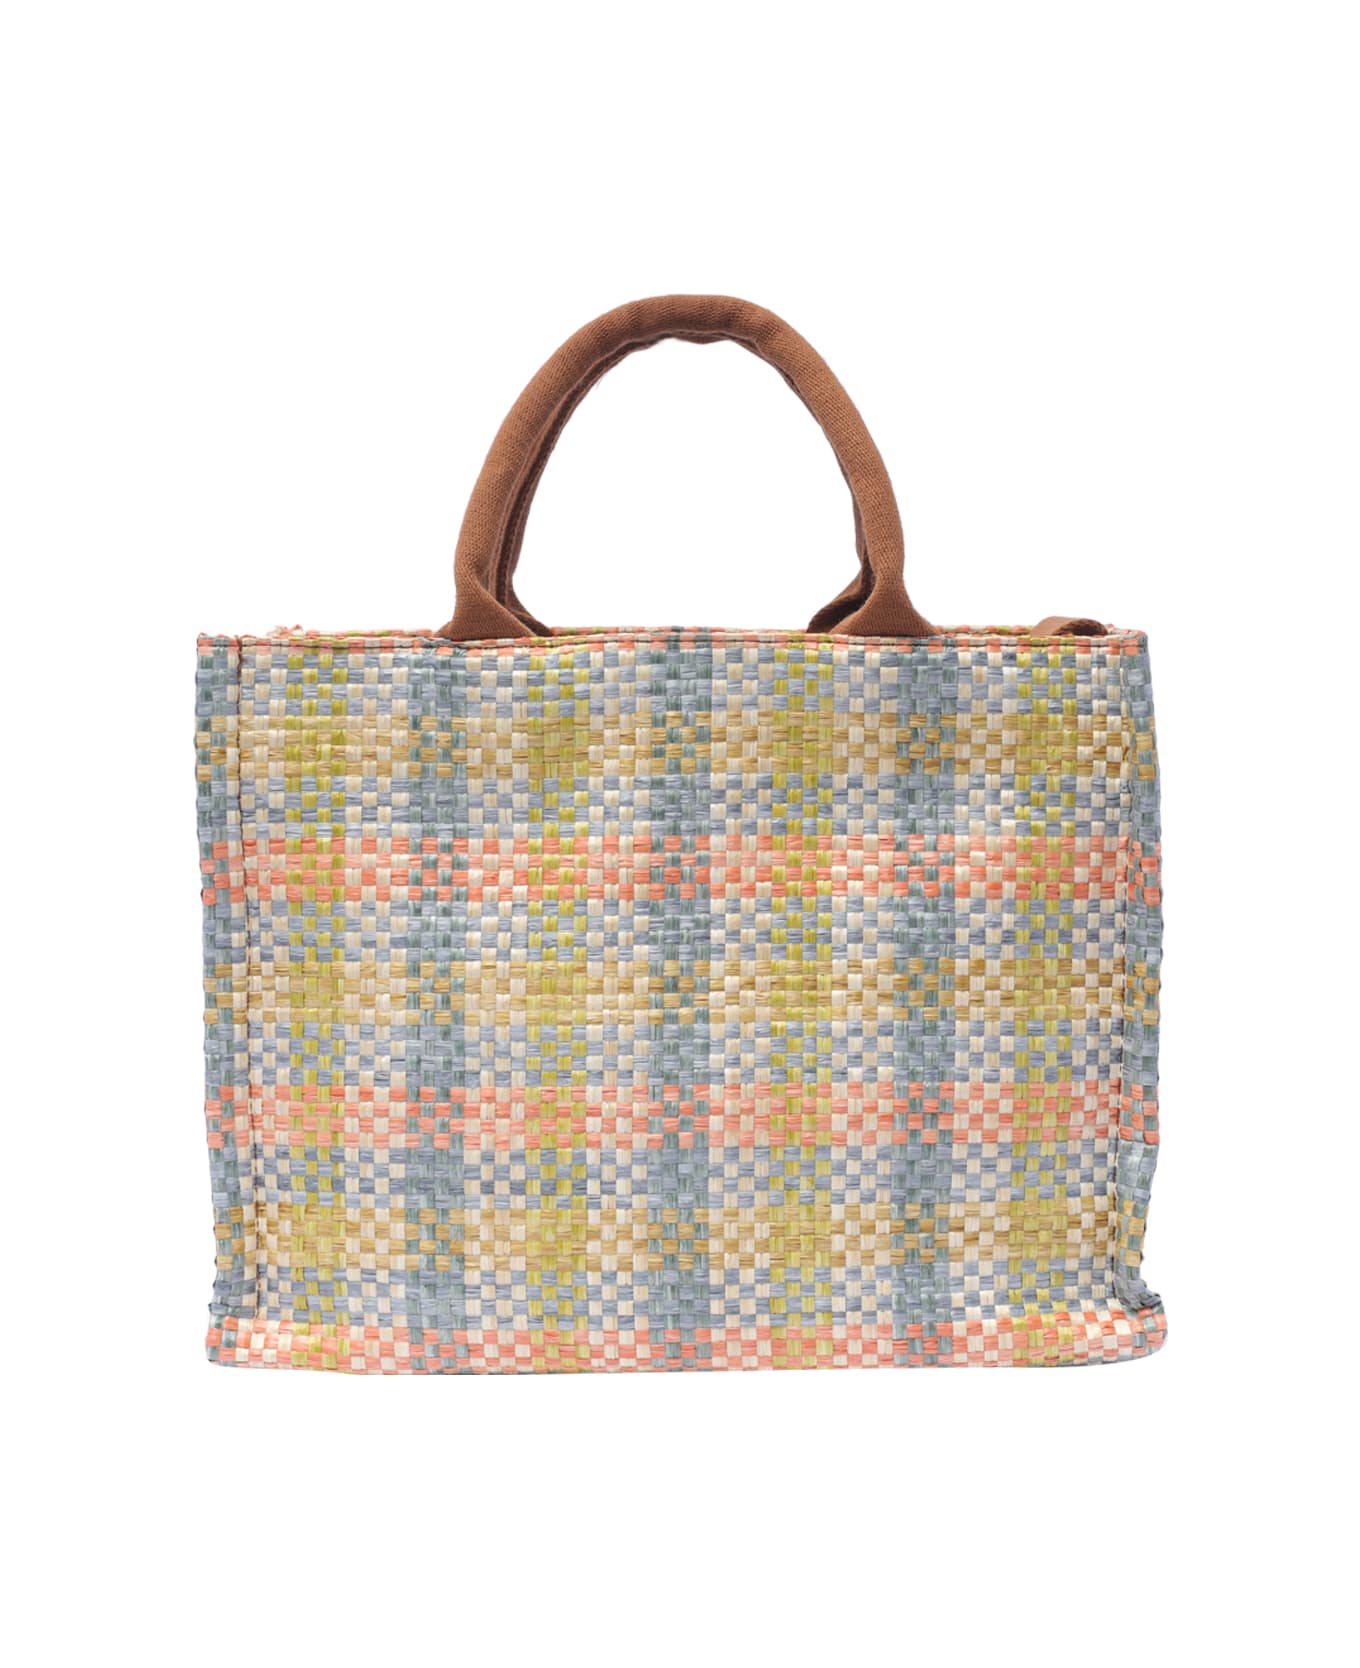 Marni Small Basket Bag Rafia Tissue - Lemon/apricot/moca